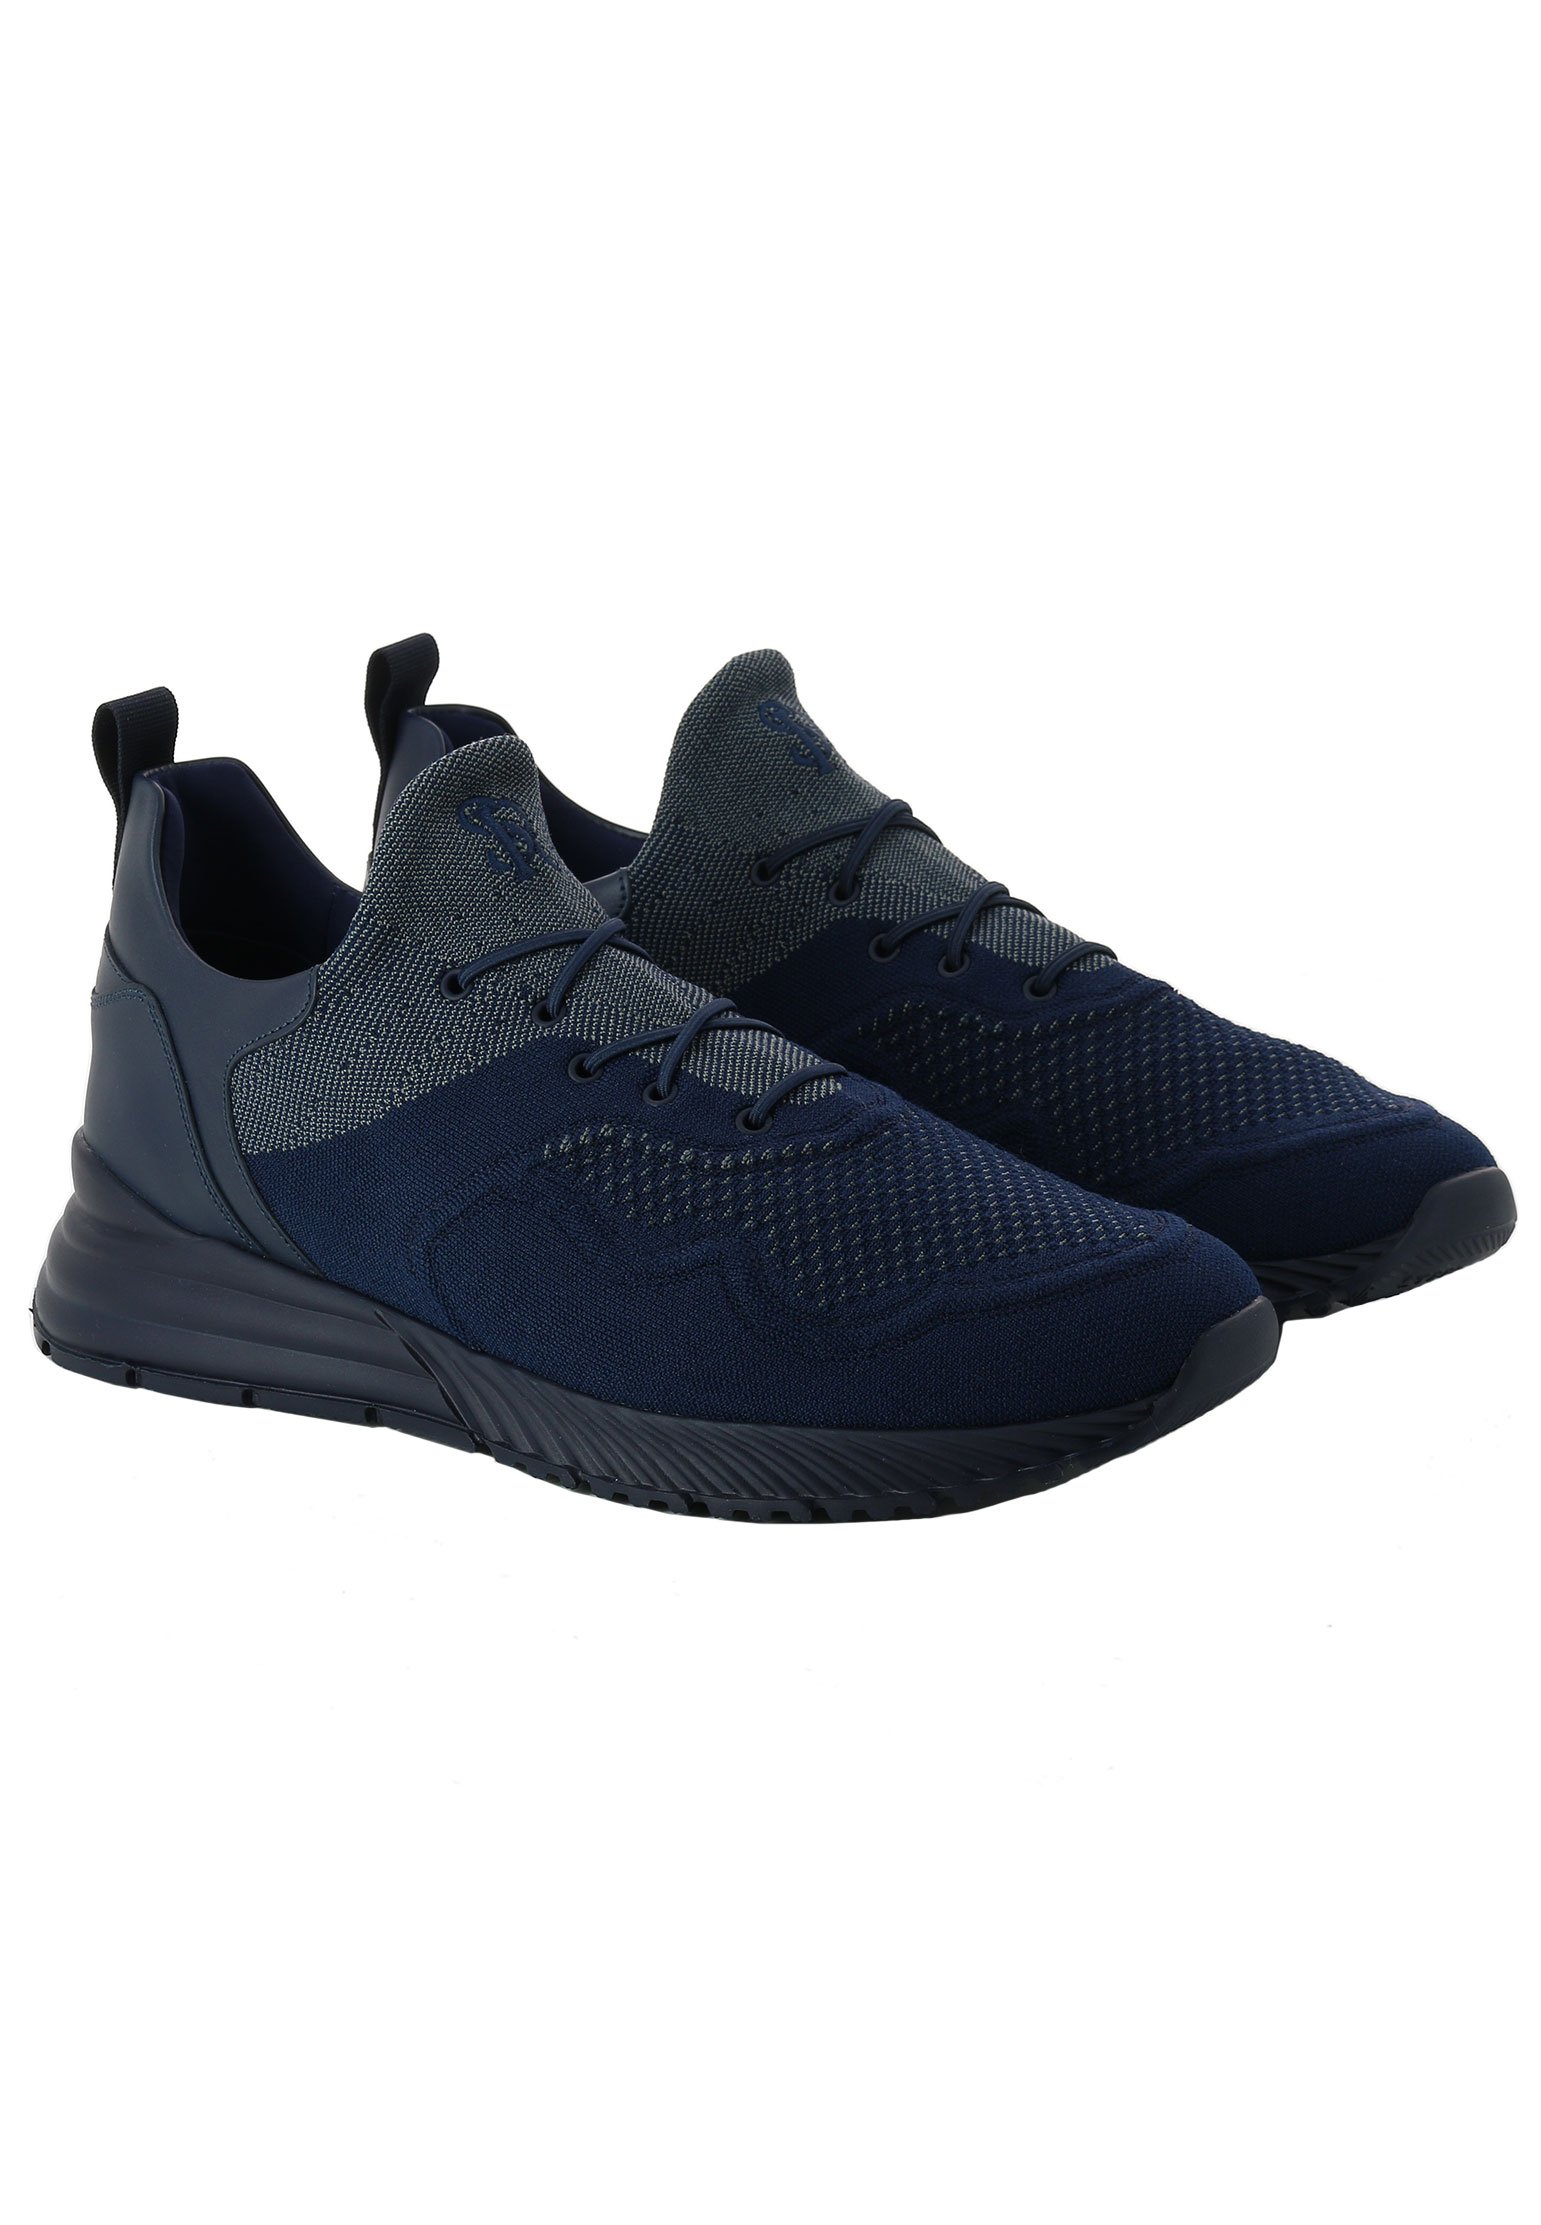 Baskets STEFANO RICCI Color: blue marine (Code: 320) in online store Allure